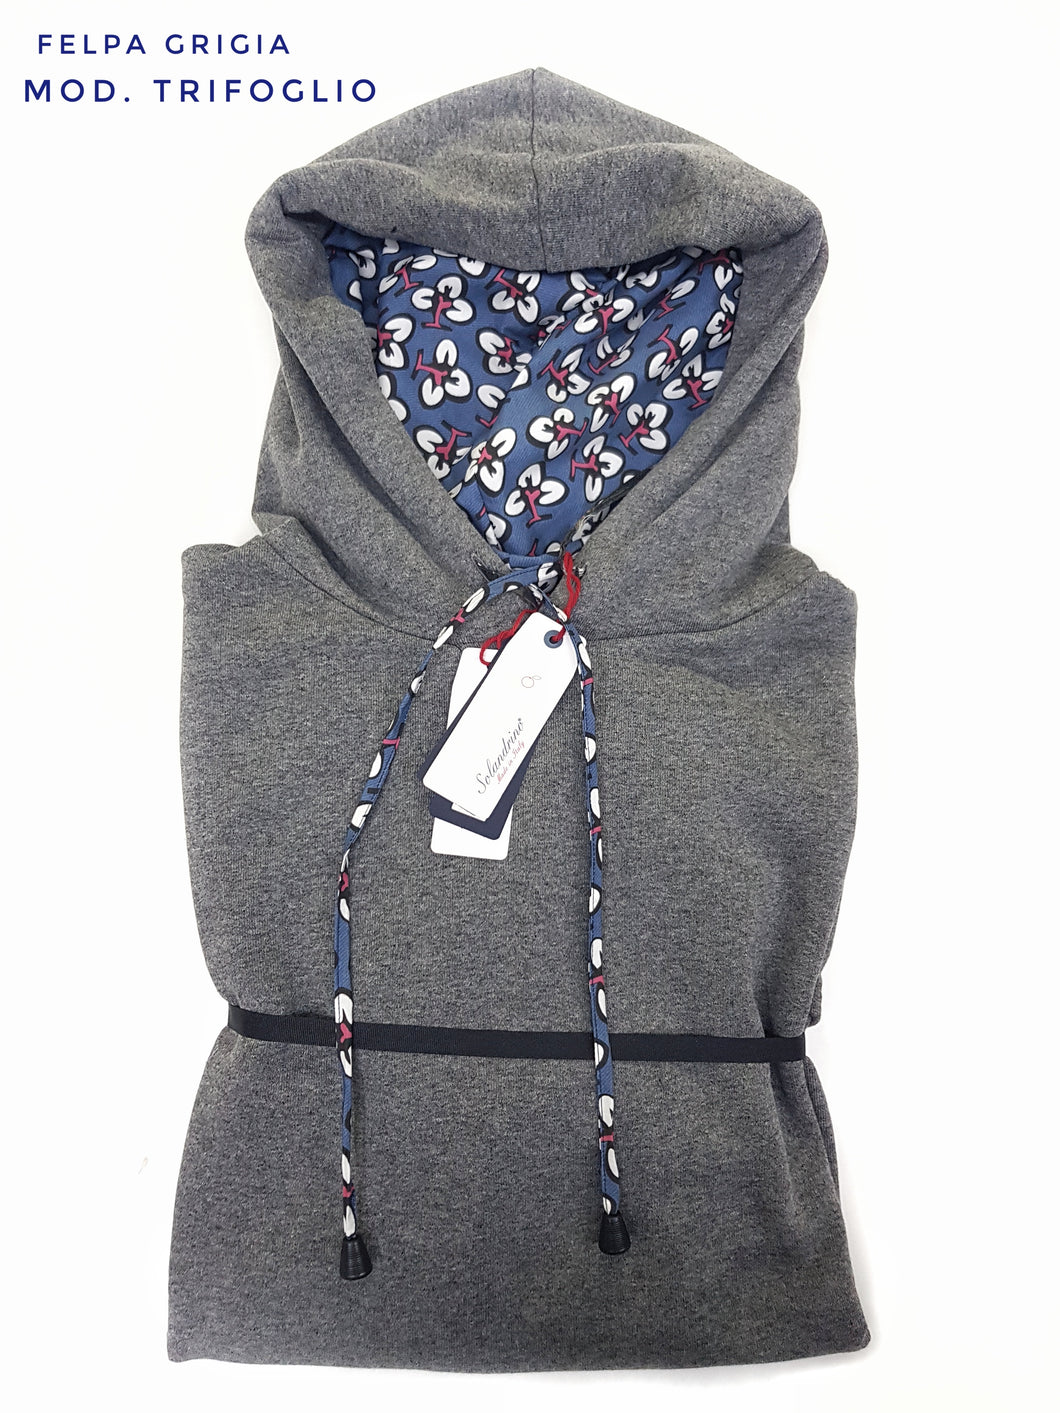 Felpa Grigia con Cappuccio Design trifoglio  made in Italy Fantasia  100% cotone -UNISEX Sweatshirt grey hoodie